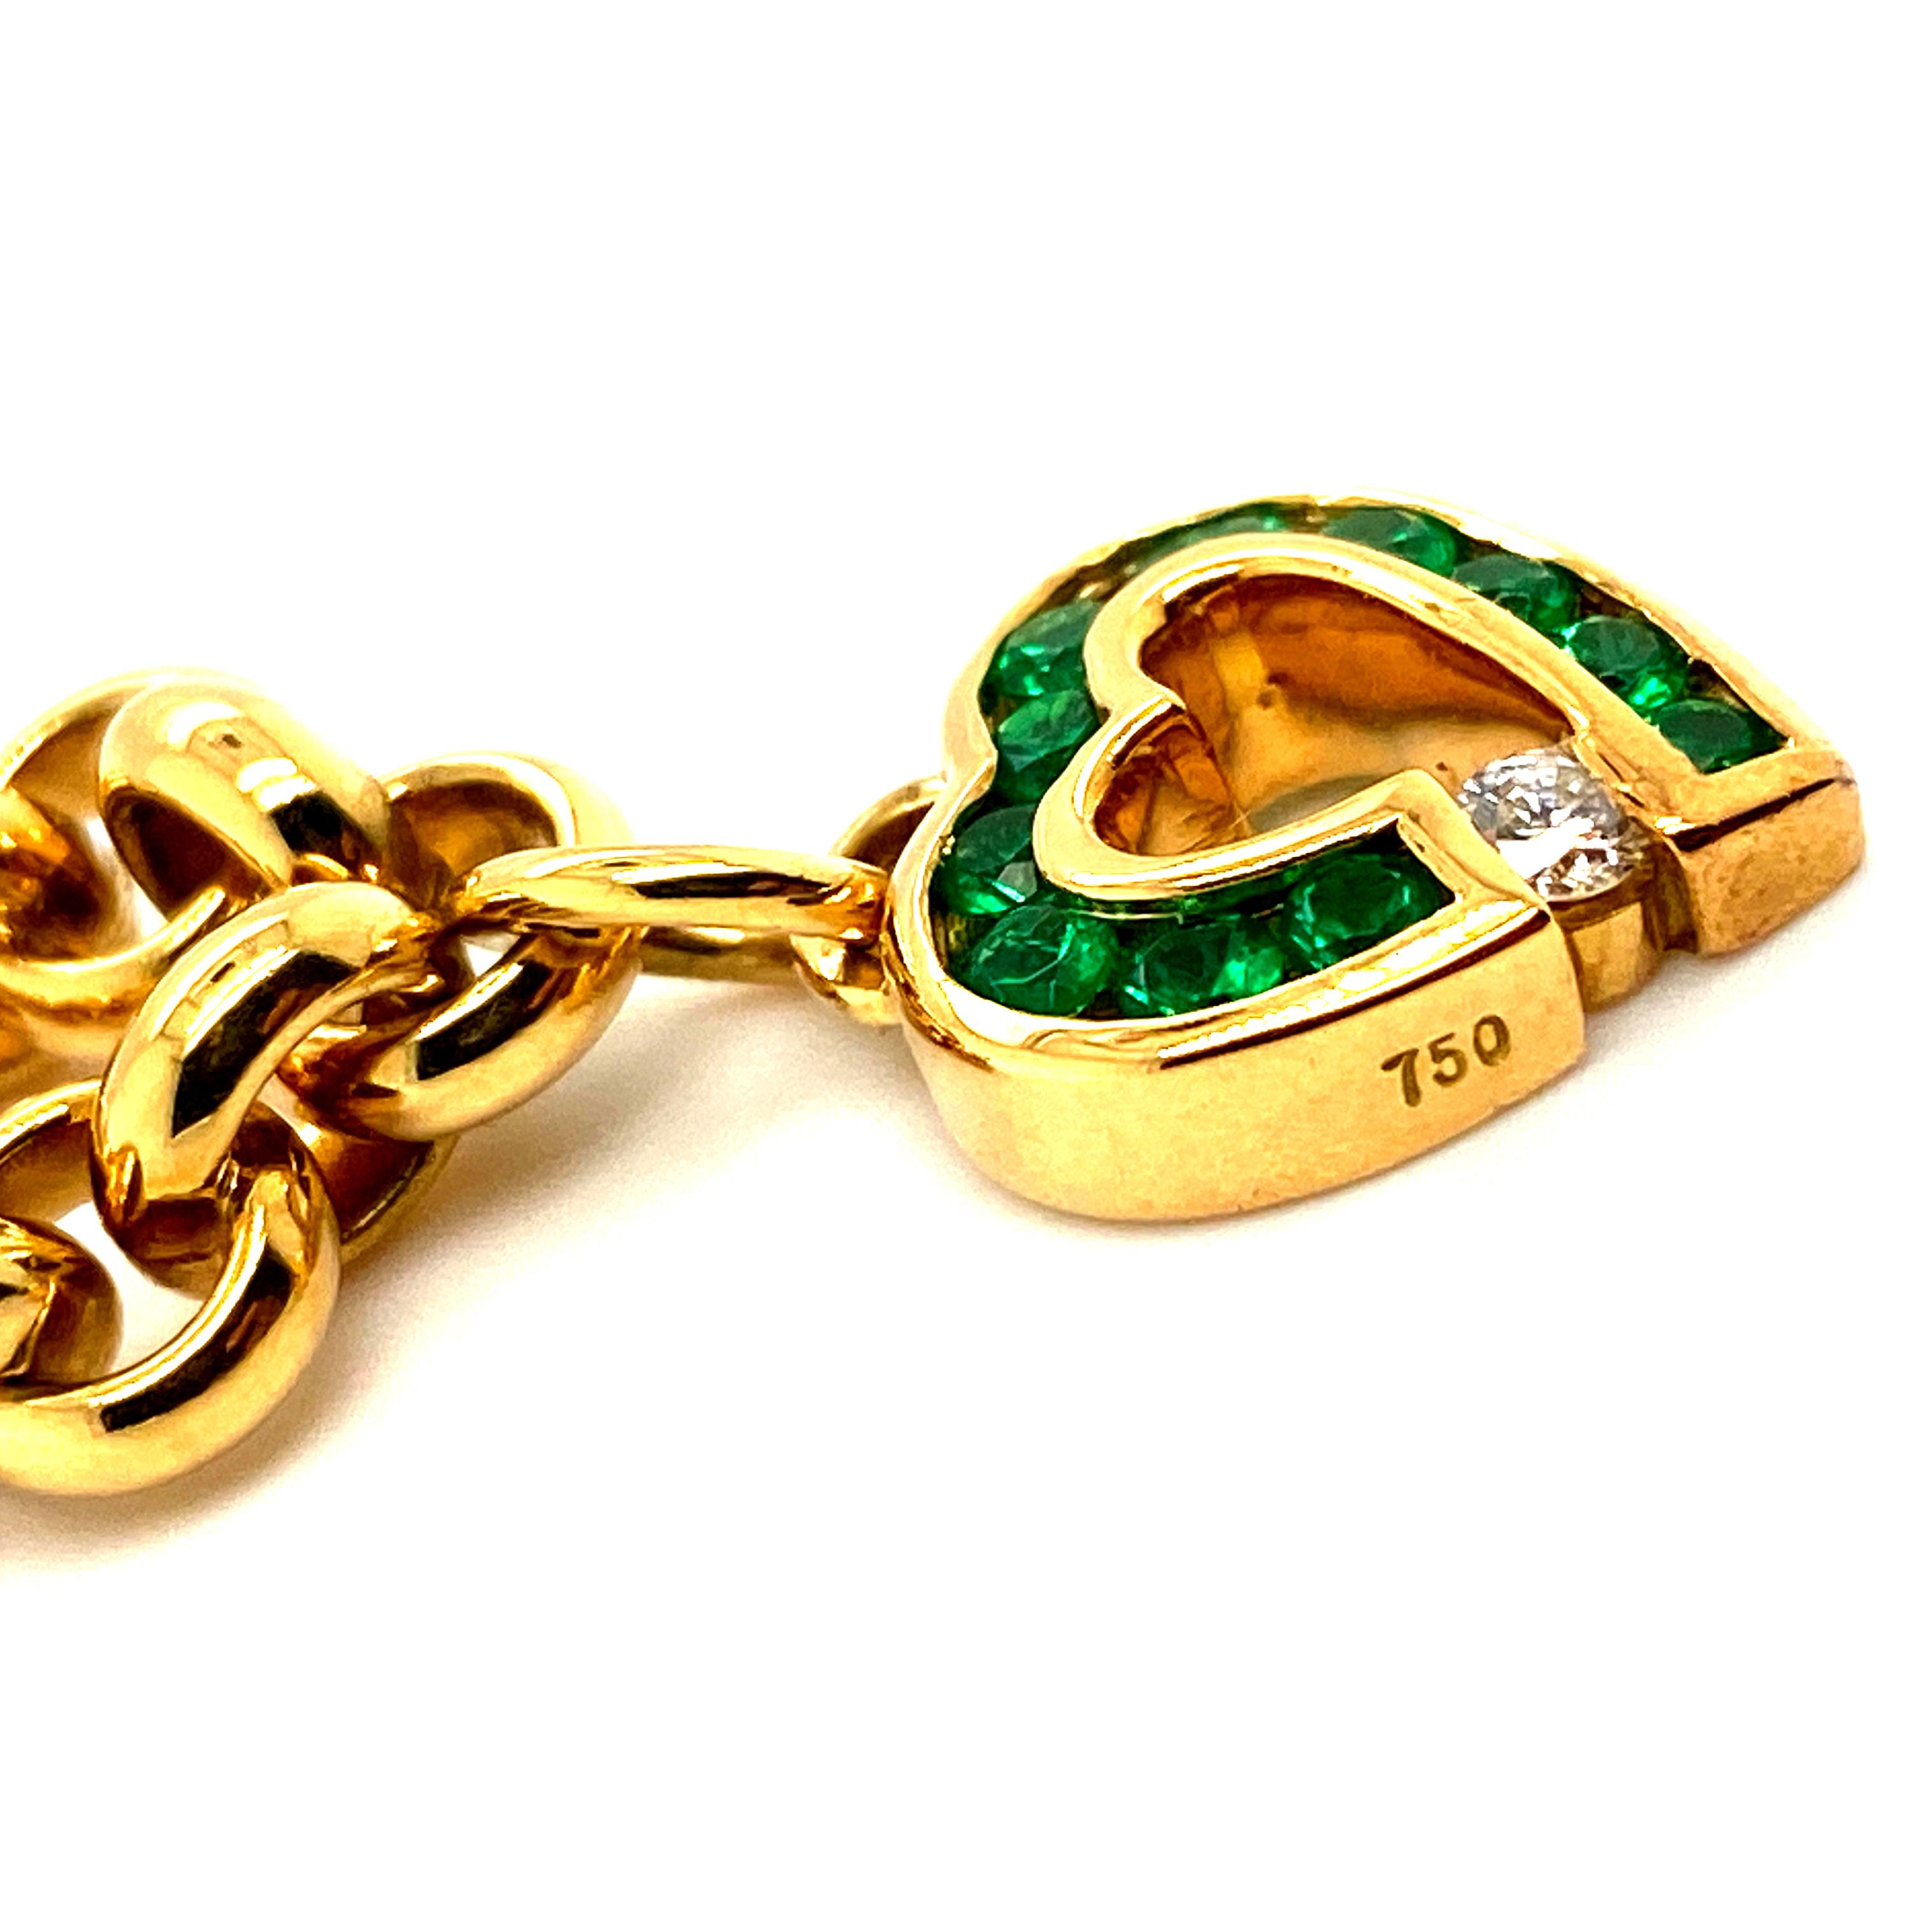 Modern Krypell 18 Karat Gold Link Bracelet with Emerald and Diamond Heart Charm